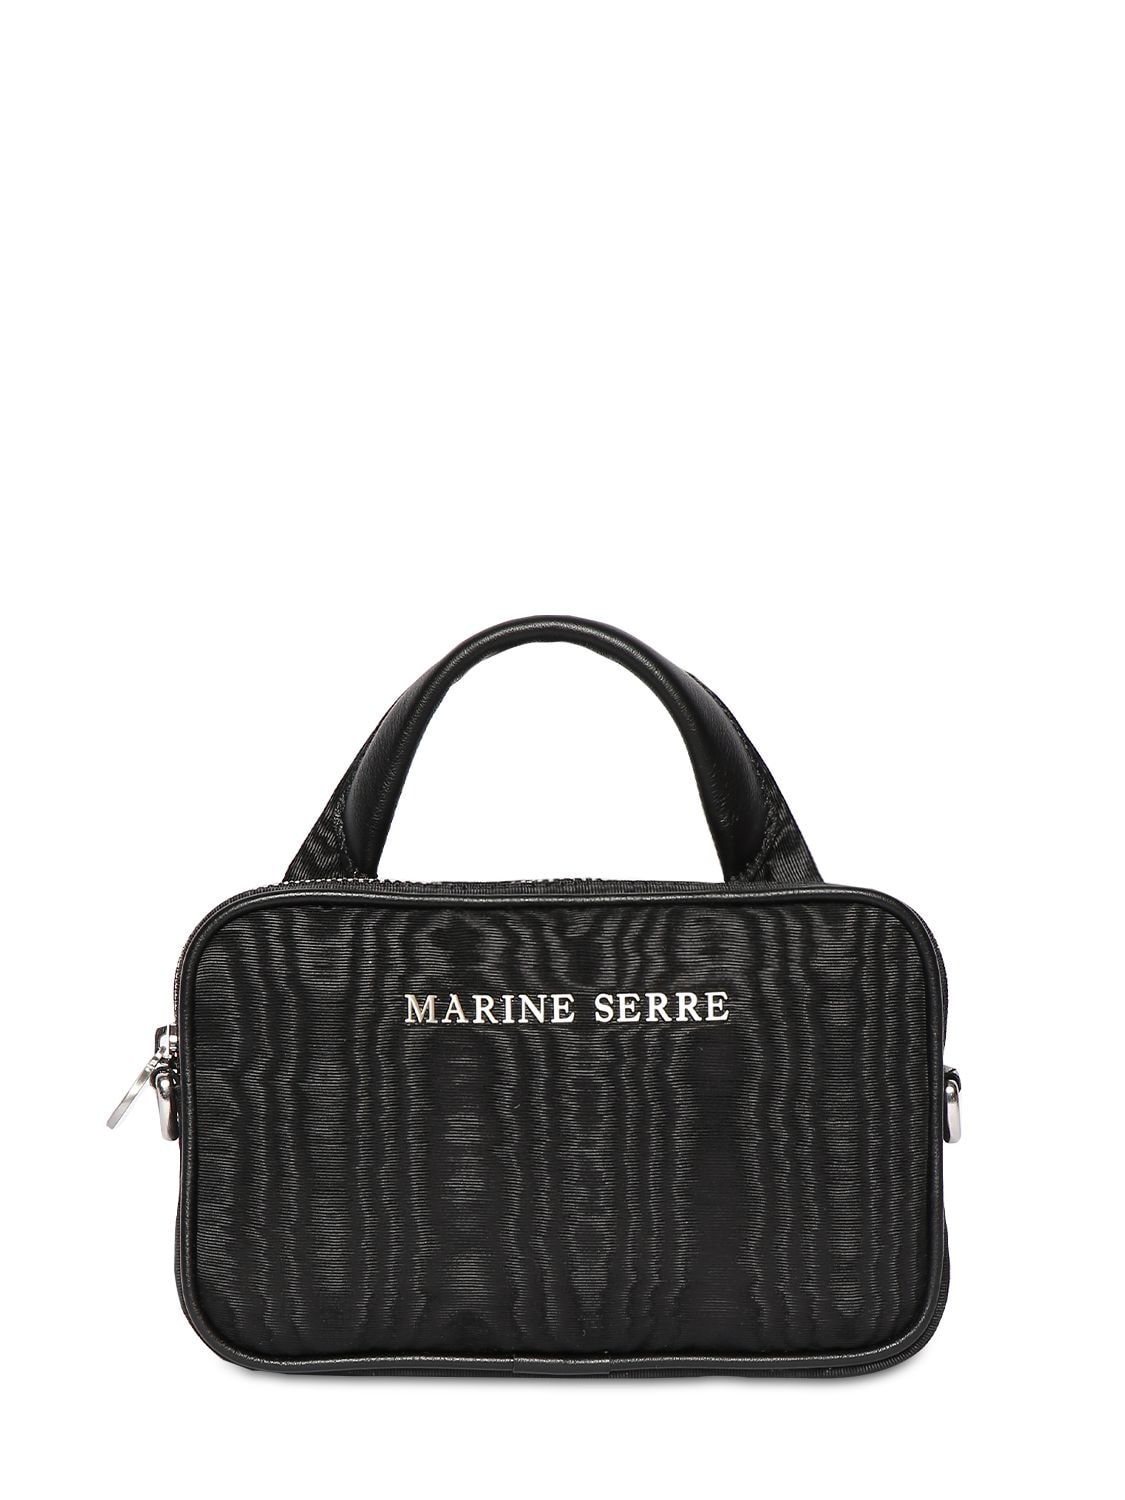 Marine Serre Mini Madame Moire Top Handle Bag